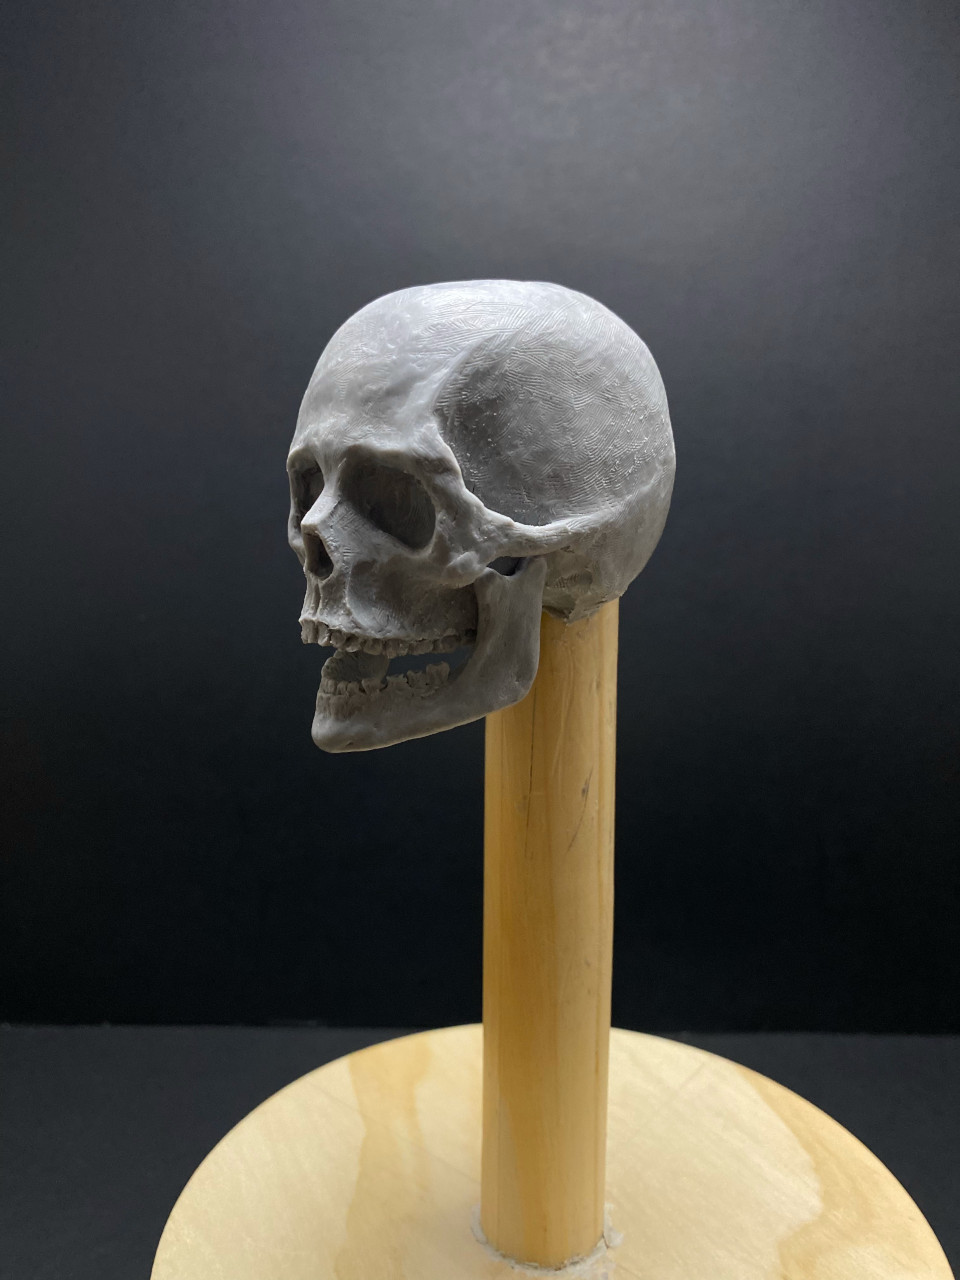 Skull Study Sculpture by Jason Jacobs